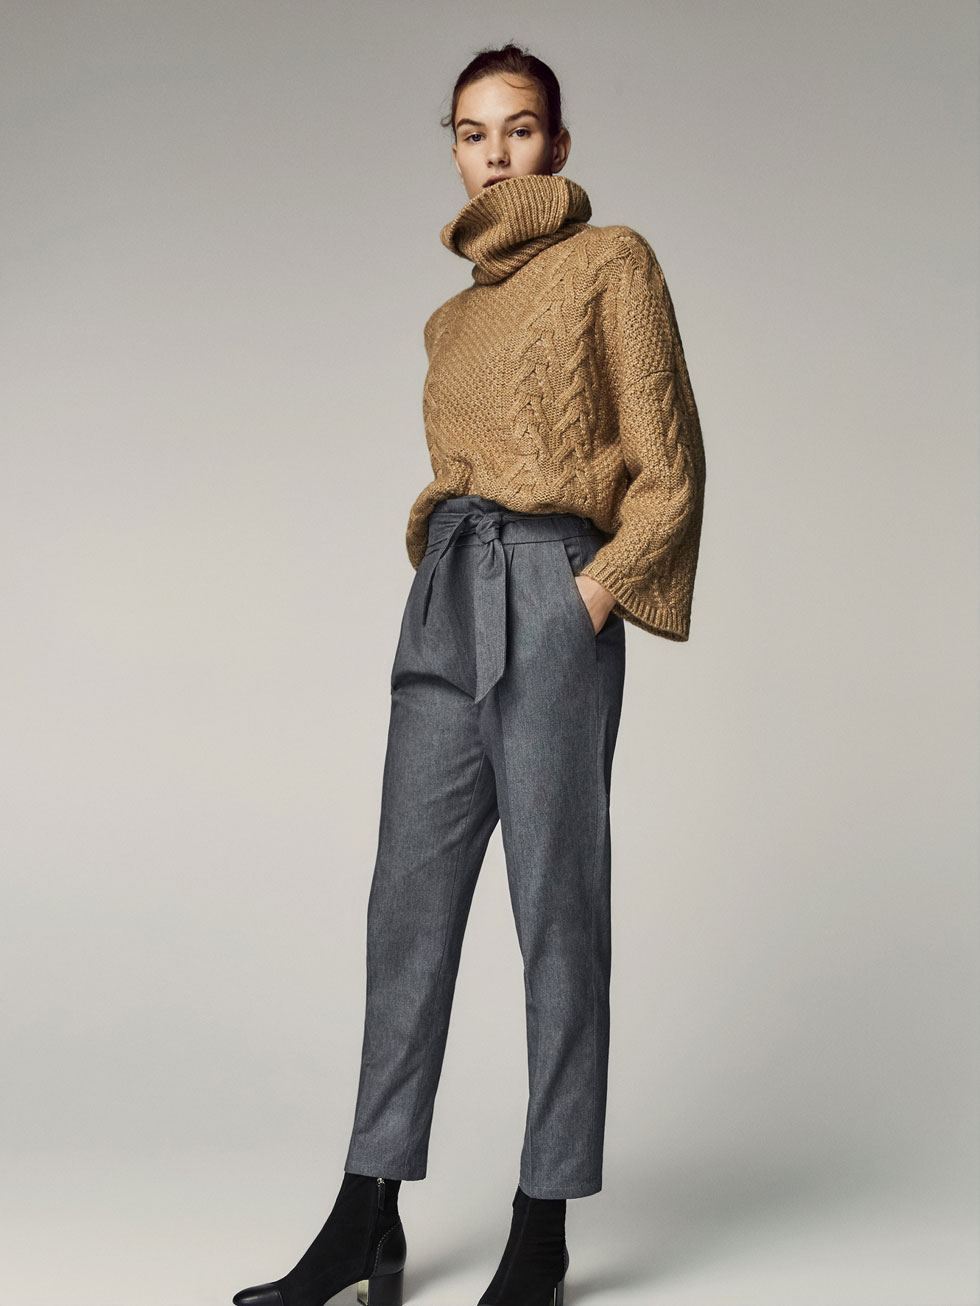 de moda otoño 2017, nueva colección Massimo Dutti - Modalia.es